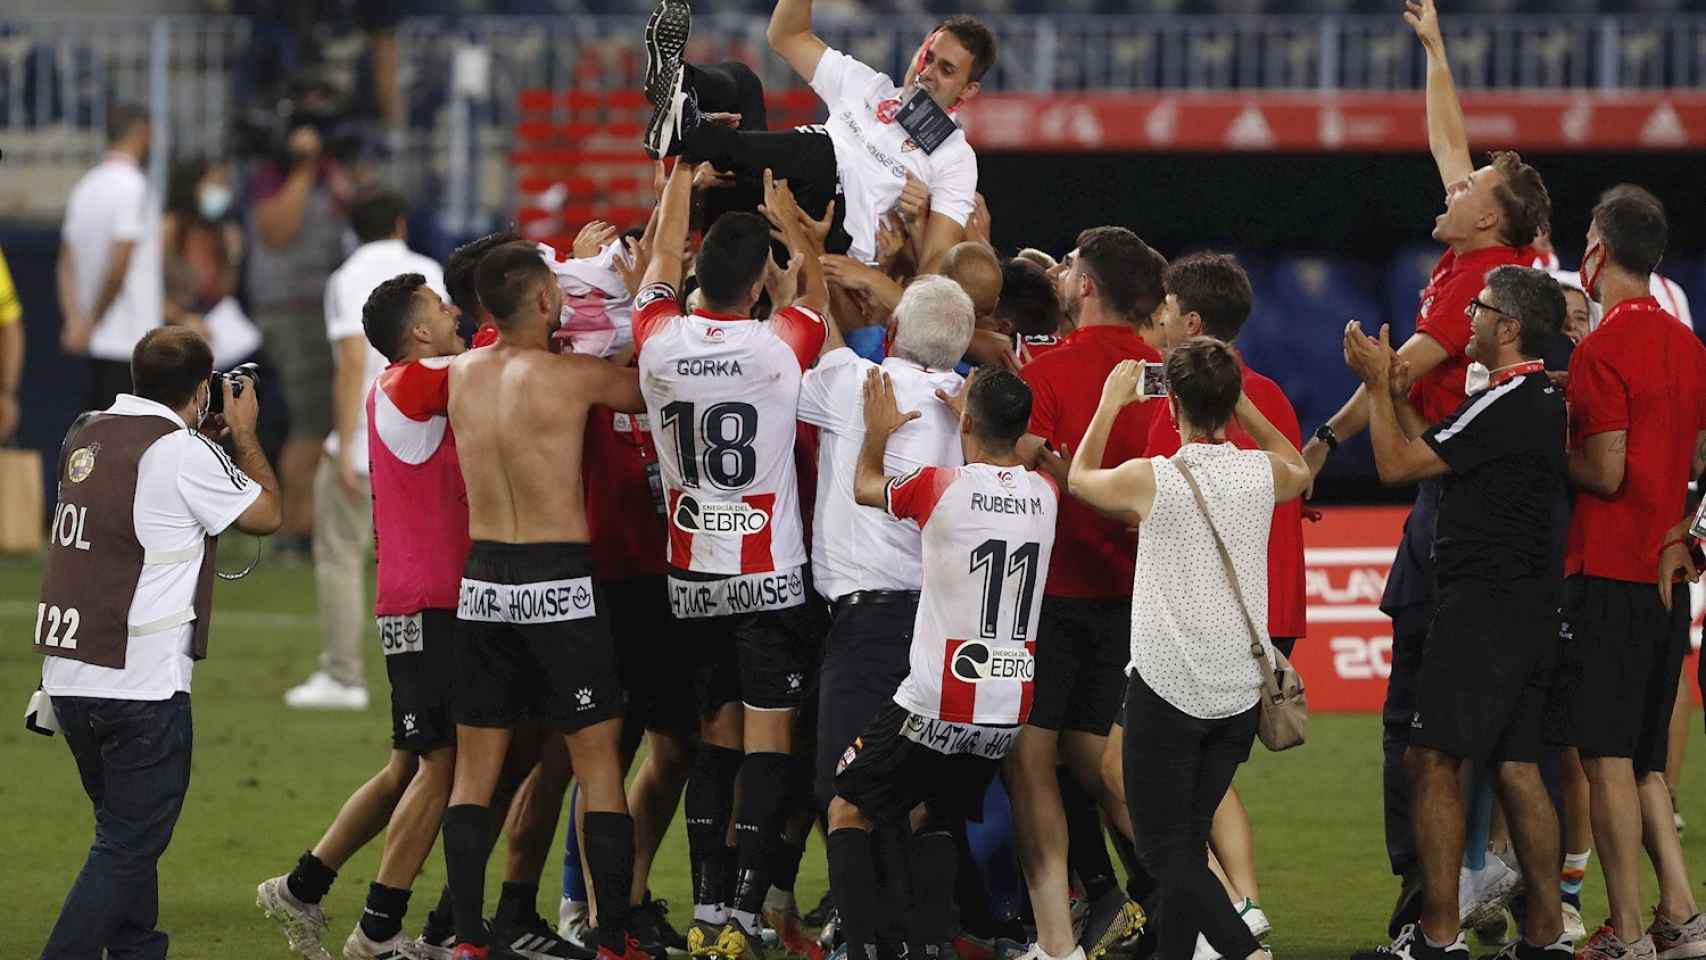 La plantilla del Logroñés celebra el ascenso a Segunda División